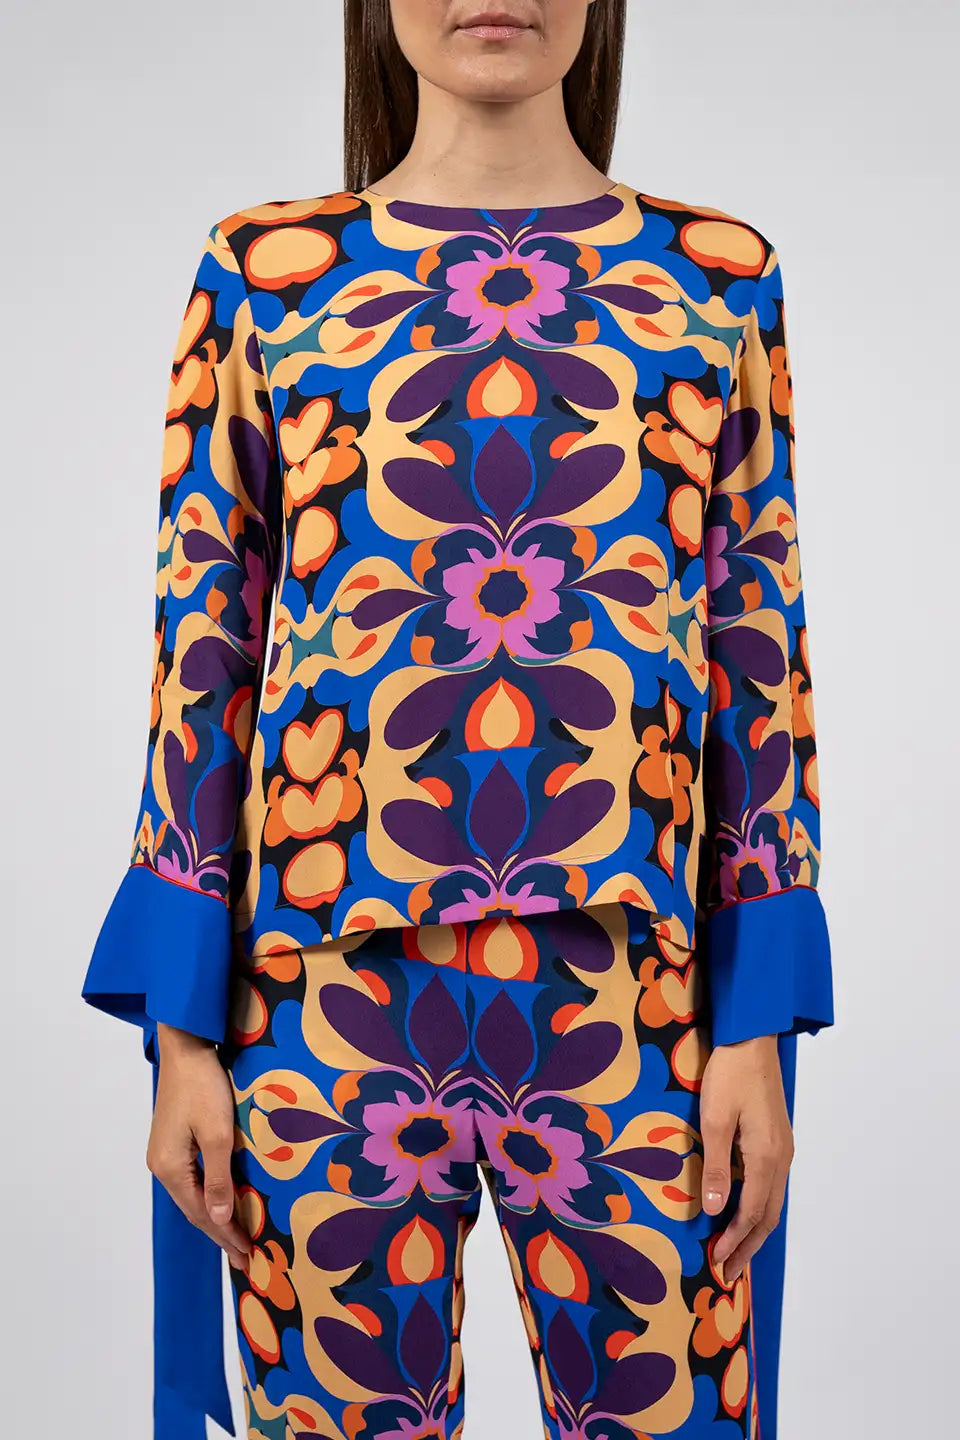 Shop online trendy Blue Women long sleeve from Borgo de Nor Fashion designer. Product gallery 1